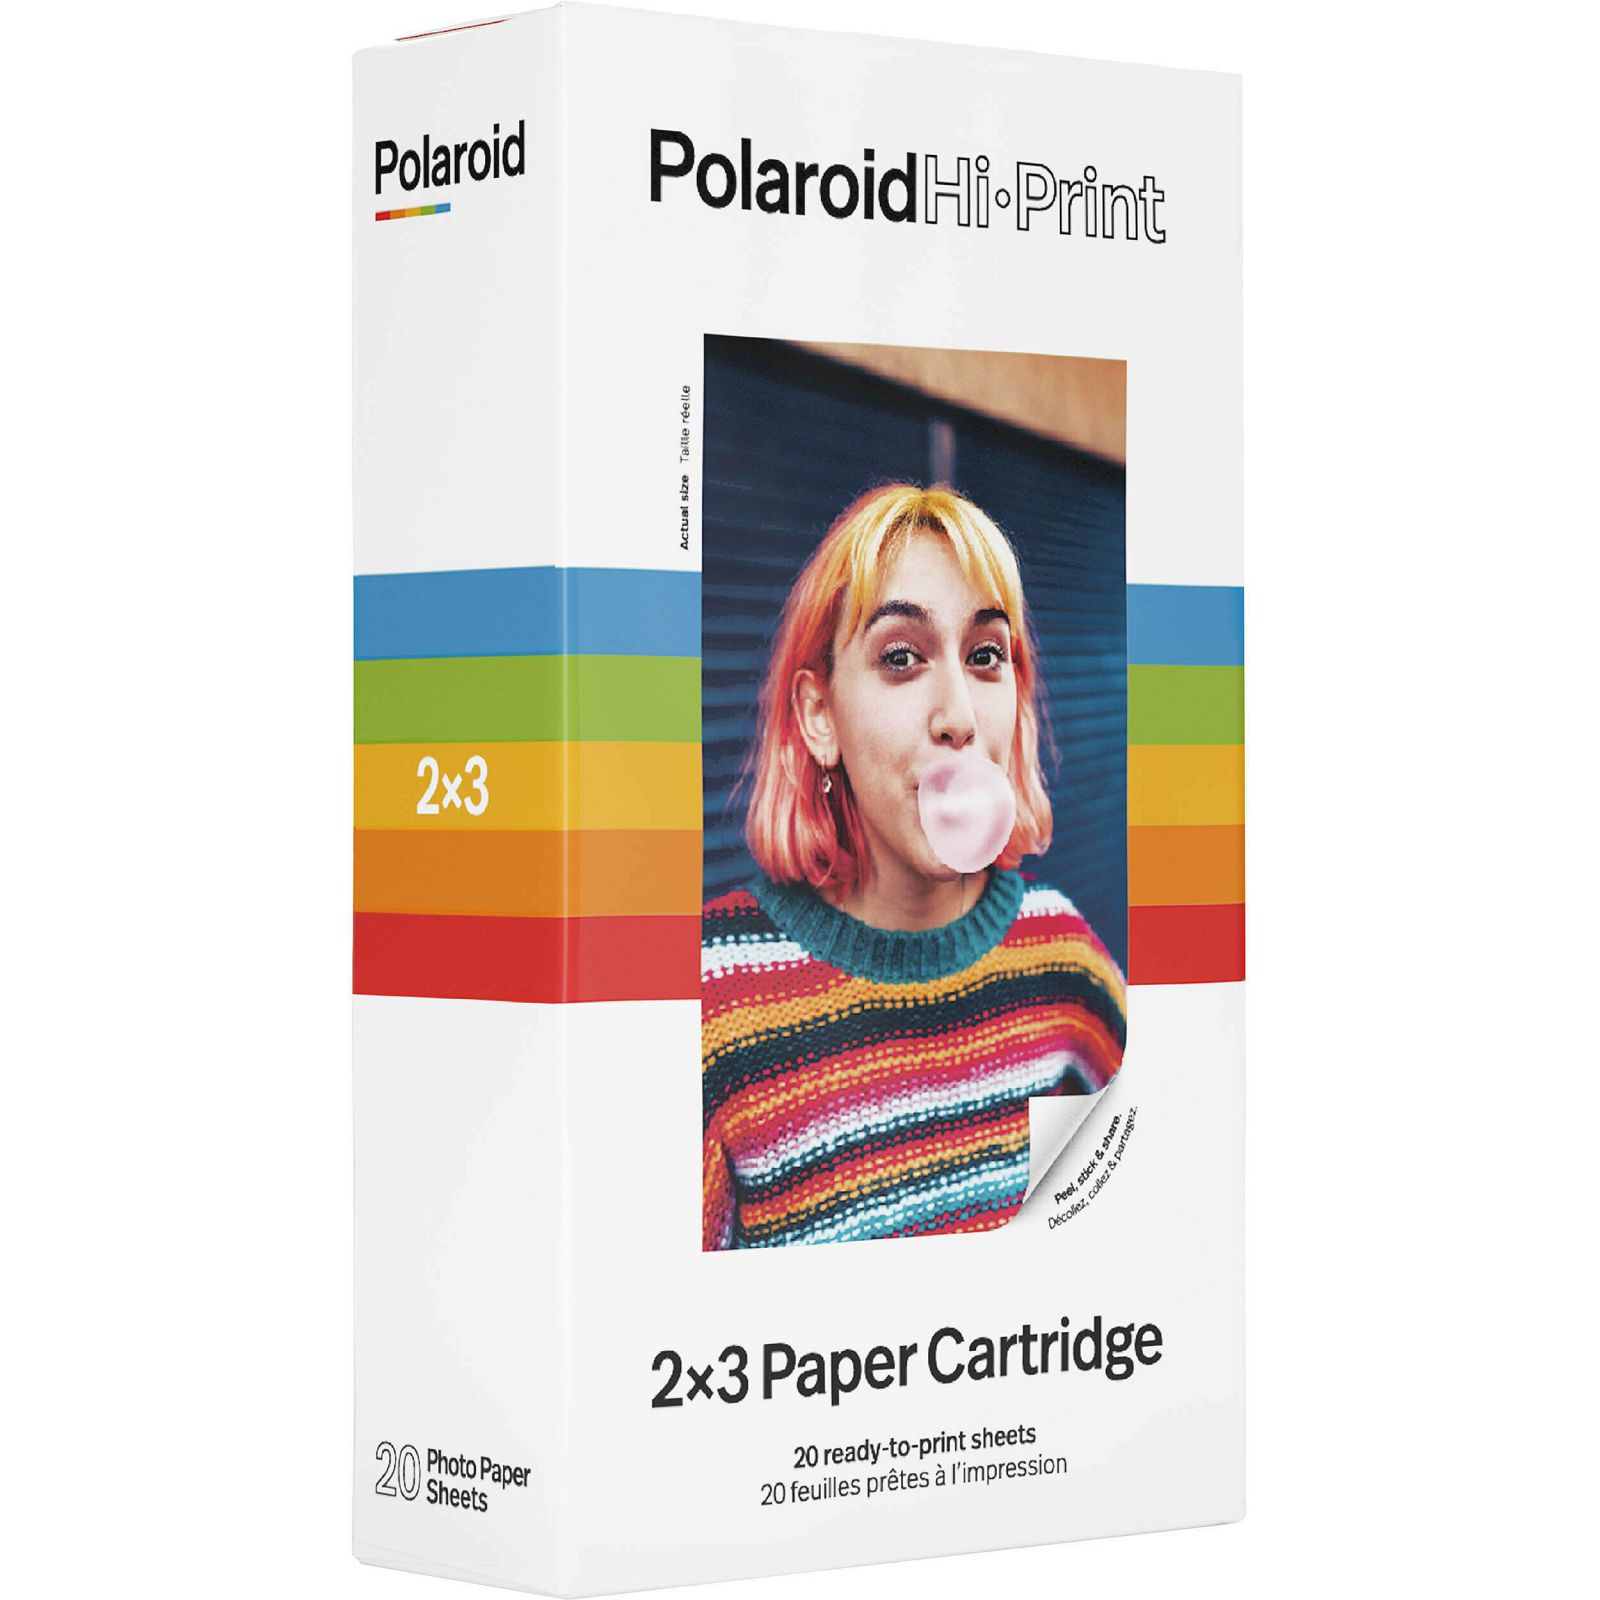 Polaroid Originals Hi Print 2×3 Paper Cartridge 20 Sheets foto papir za fotografije u boji za Instant printer (6089)